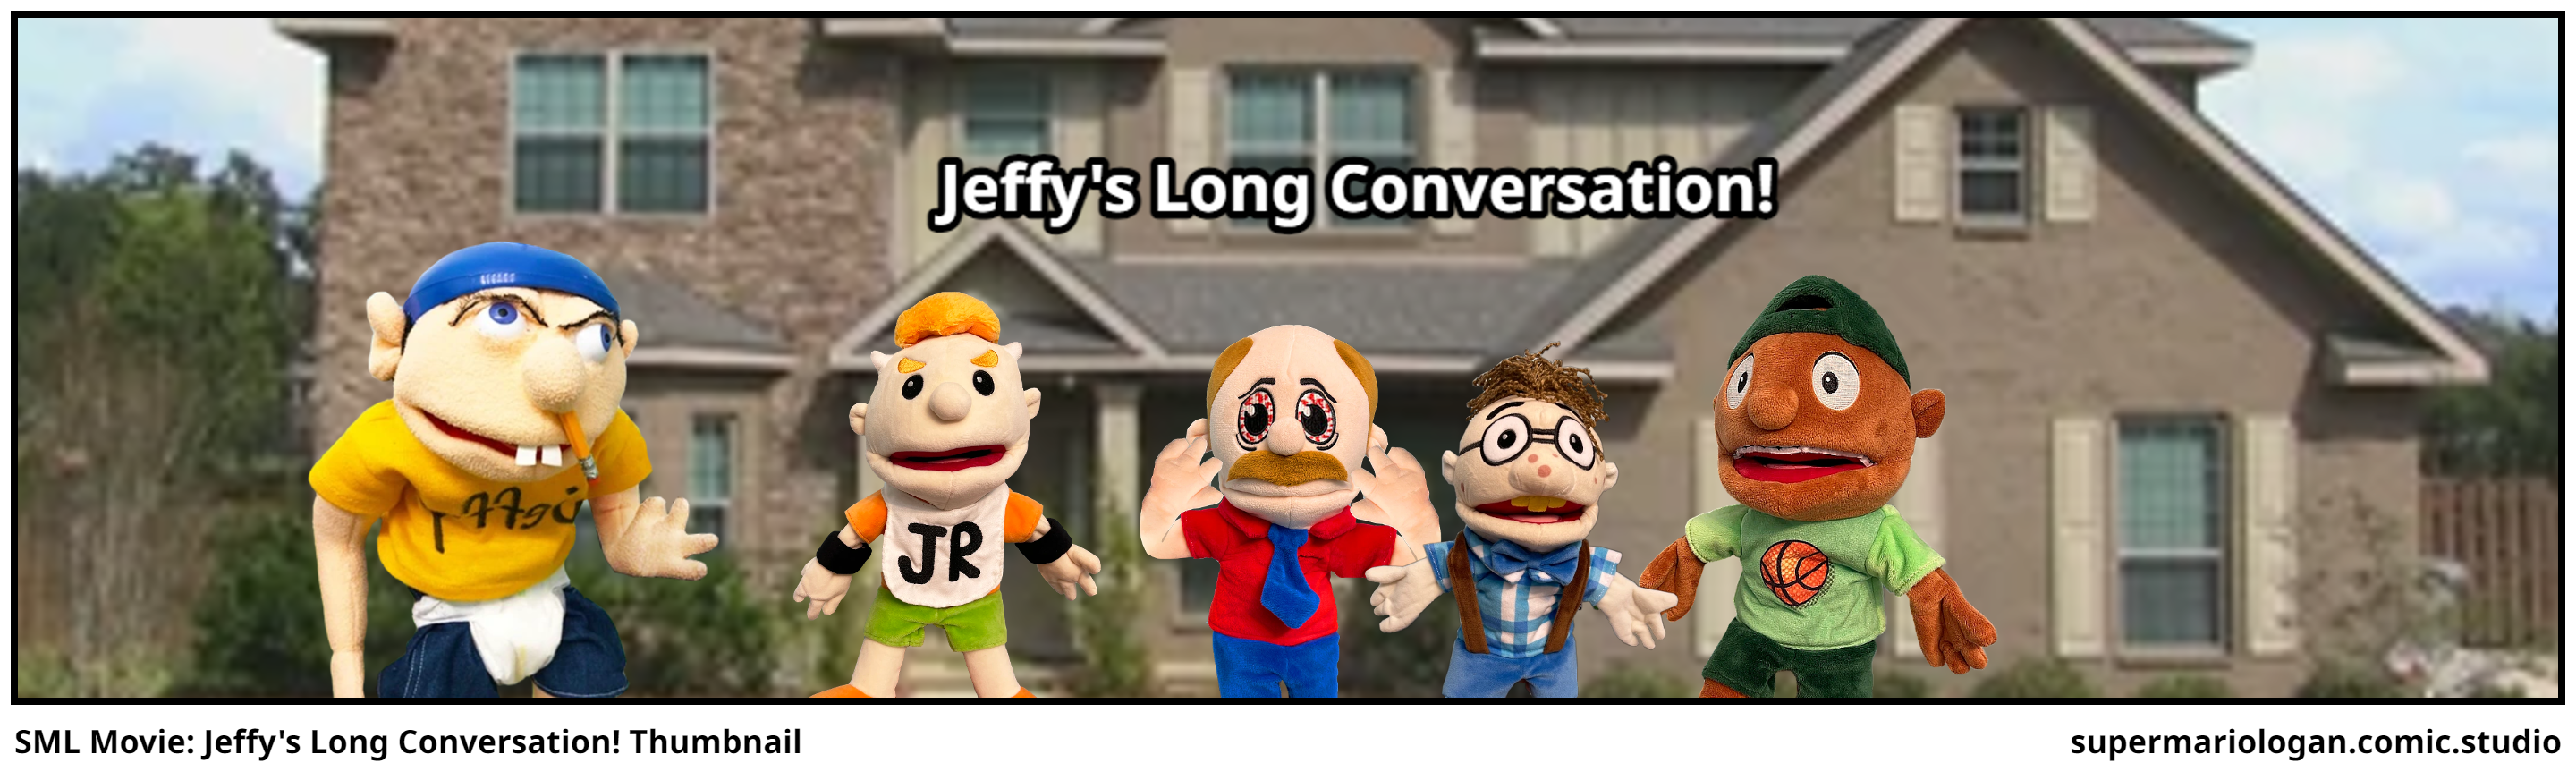 SML Movie: Jeffy's Long Conversation! Thumbnail